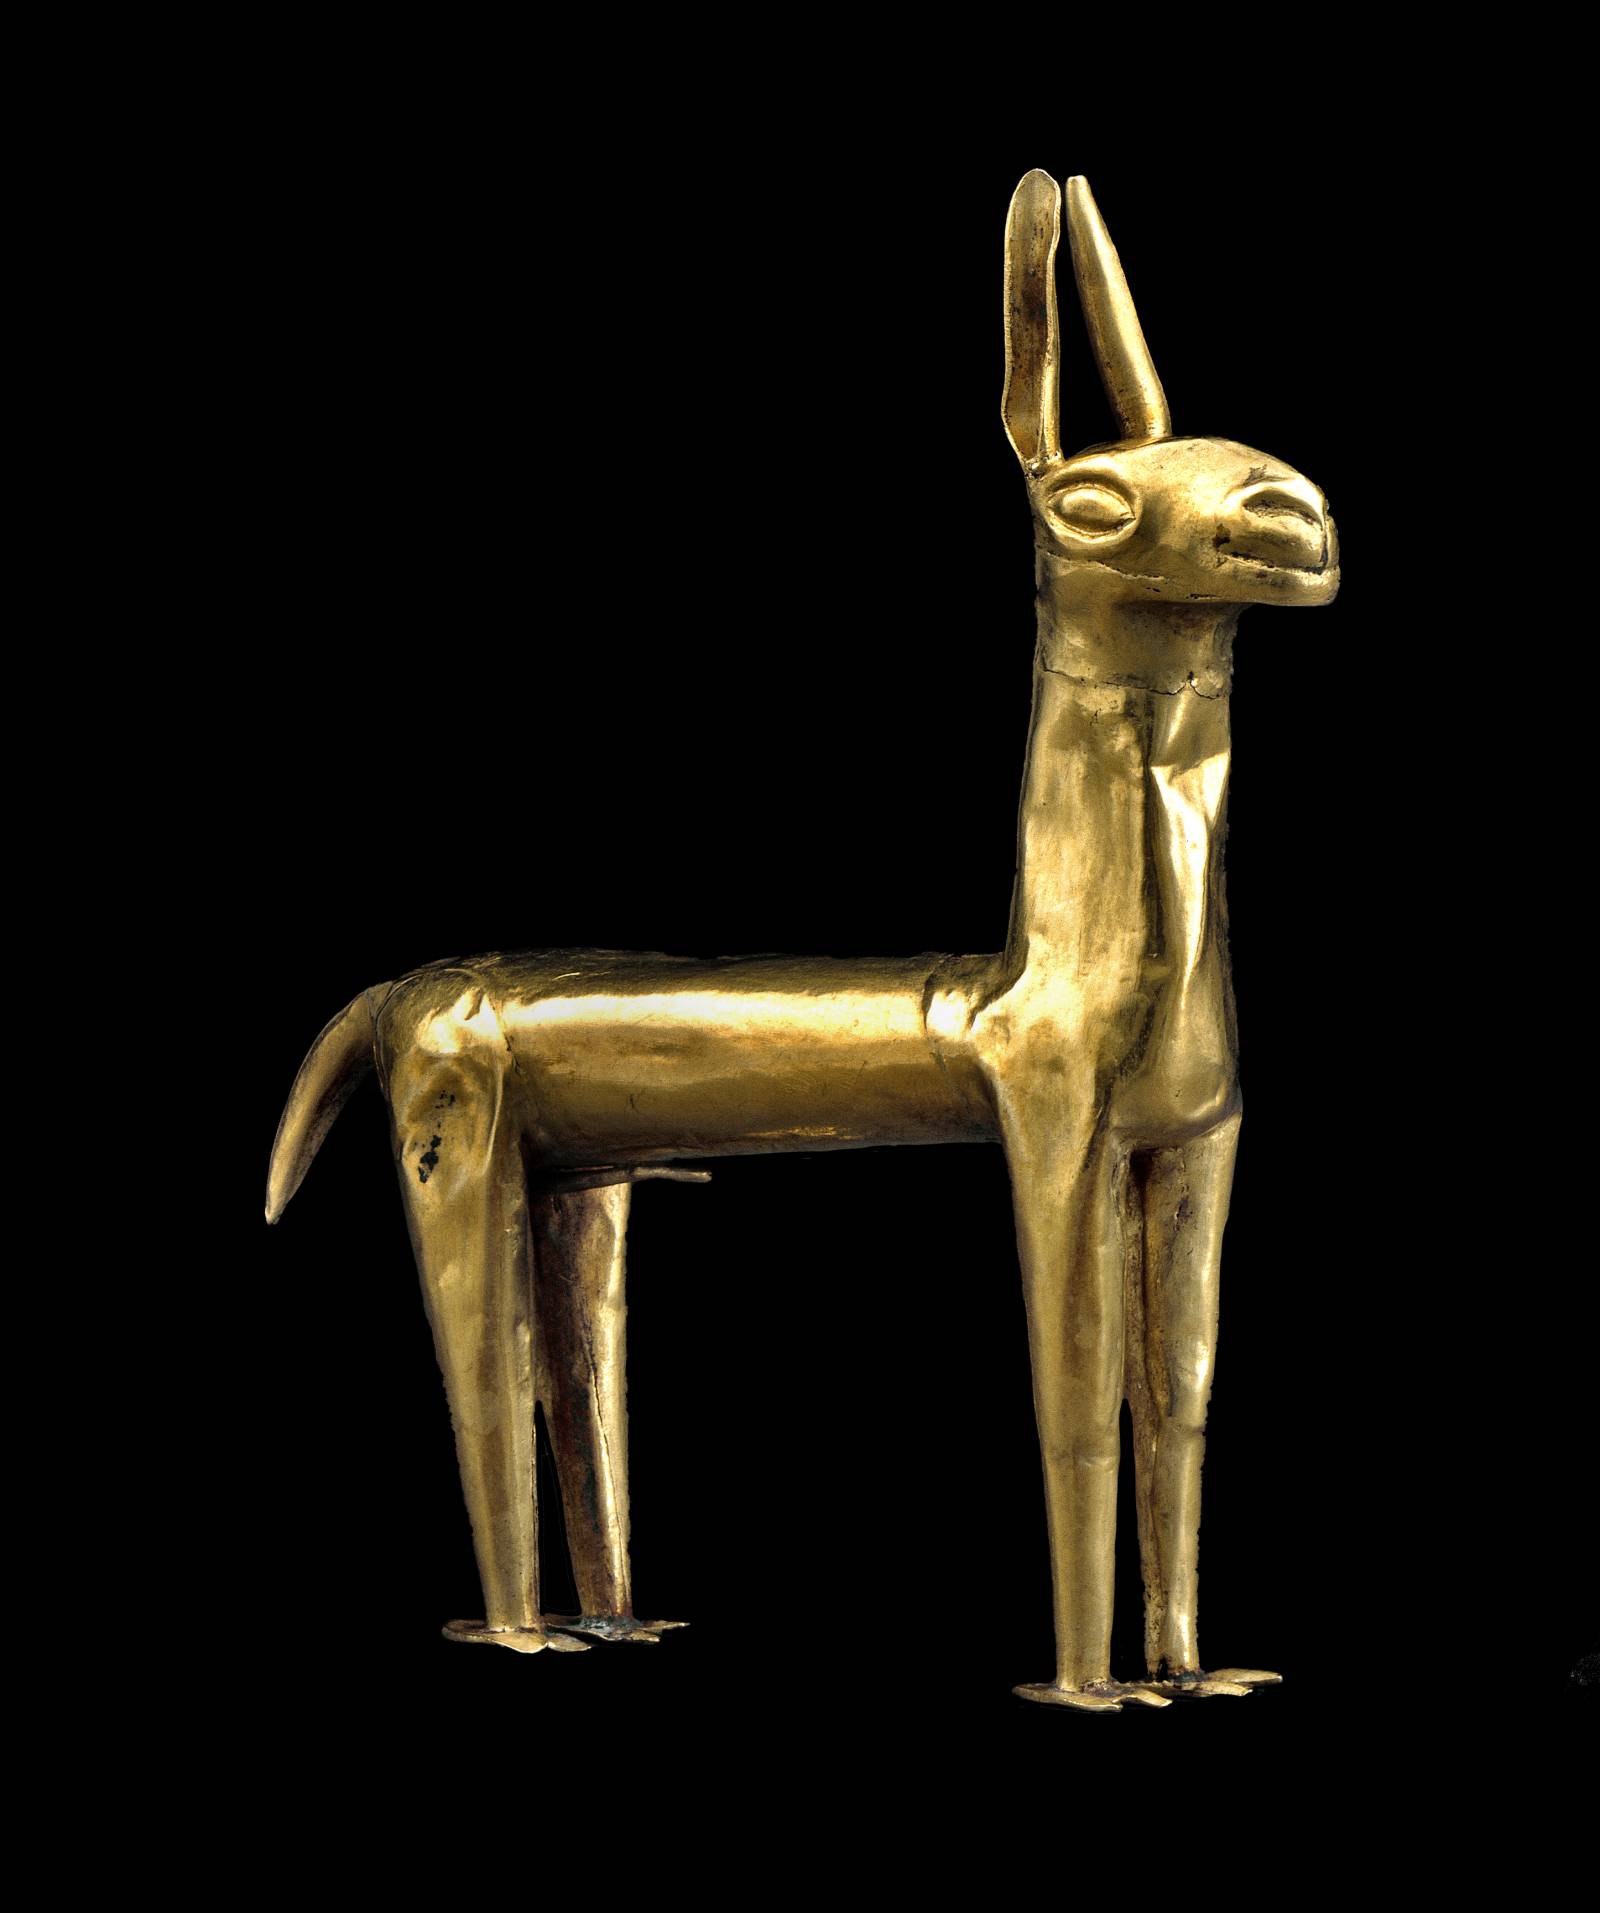 Lama, odlew ze złota (Fot. The Trustees of the British Museum)